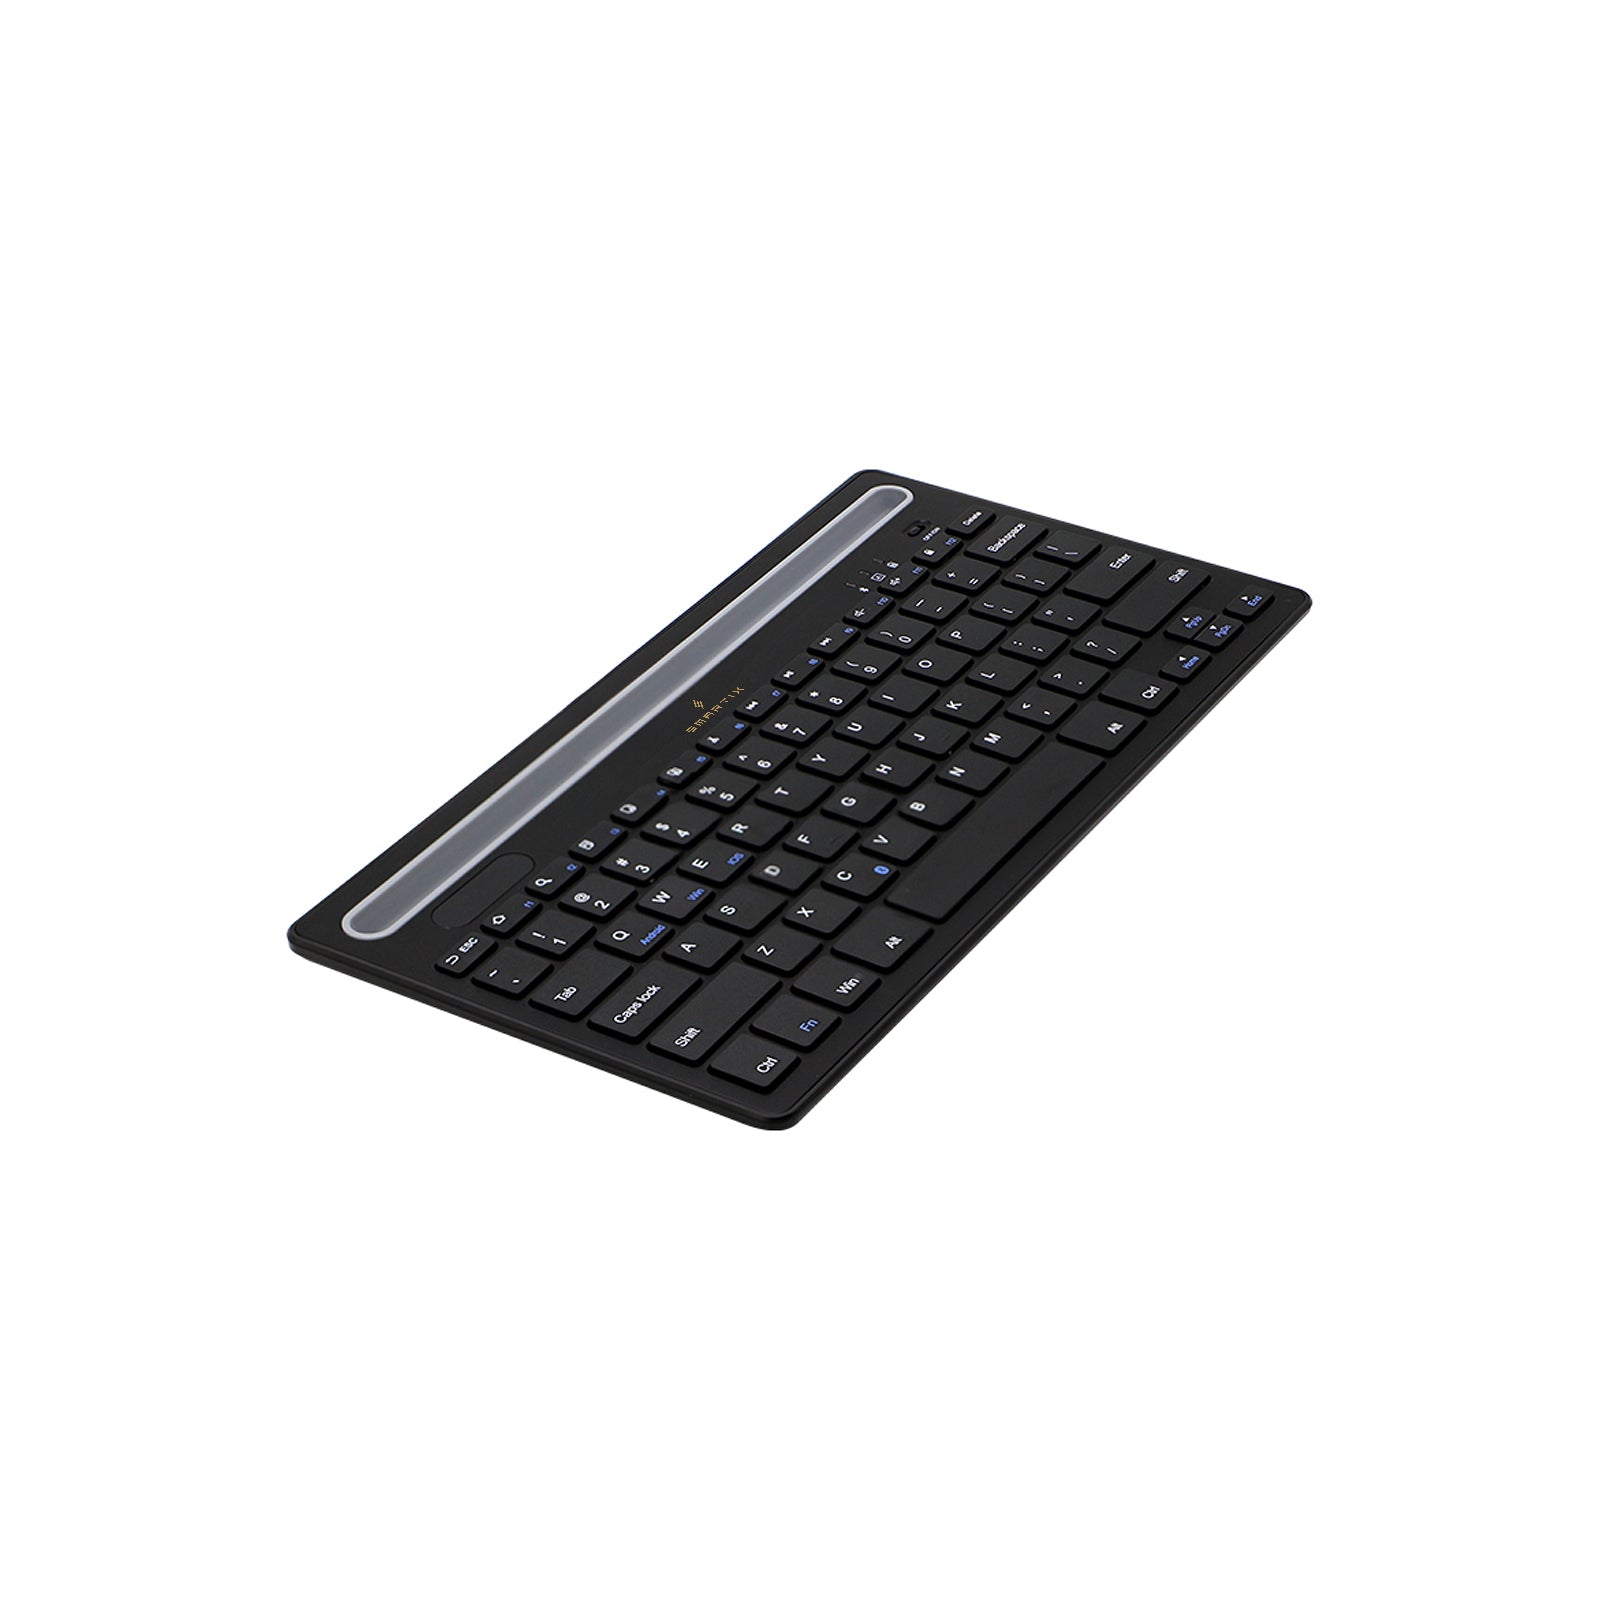 Universal Keyboard - Smart Infocomm